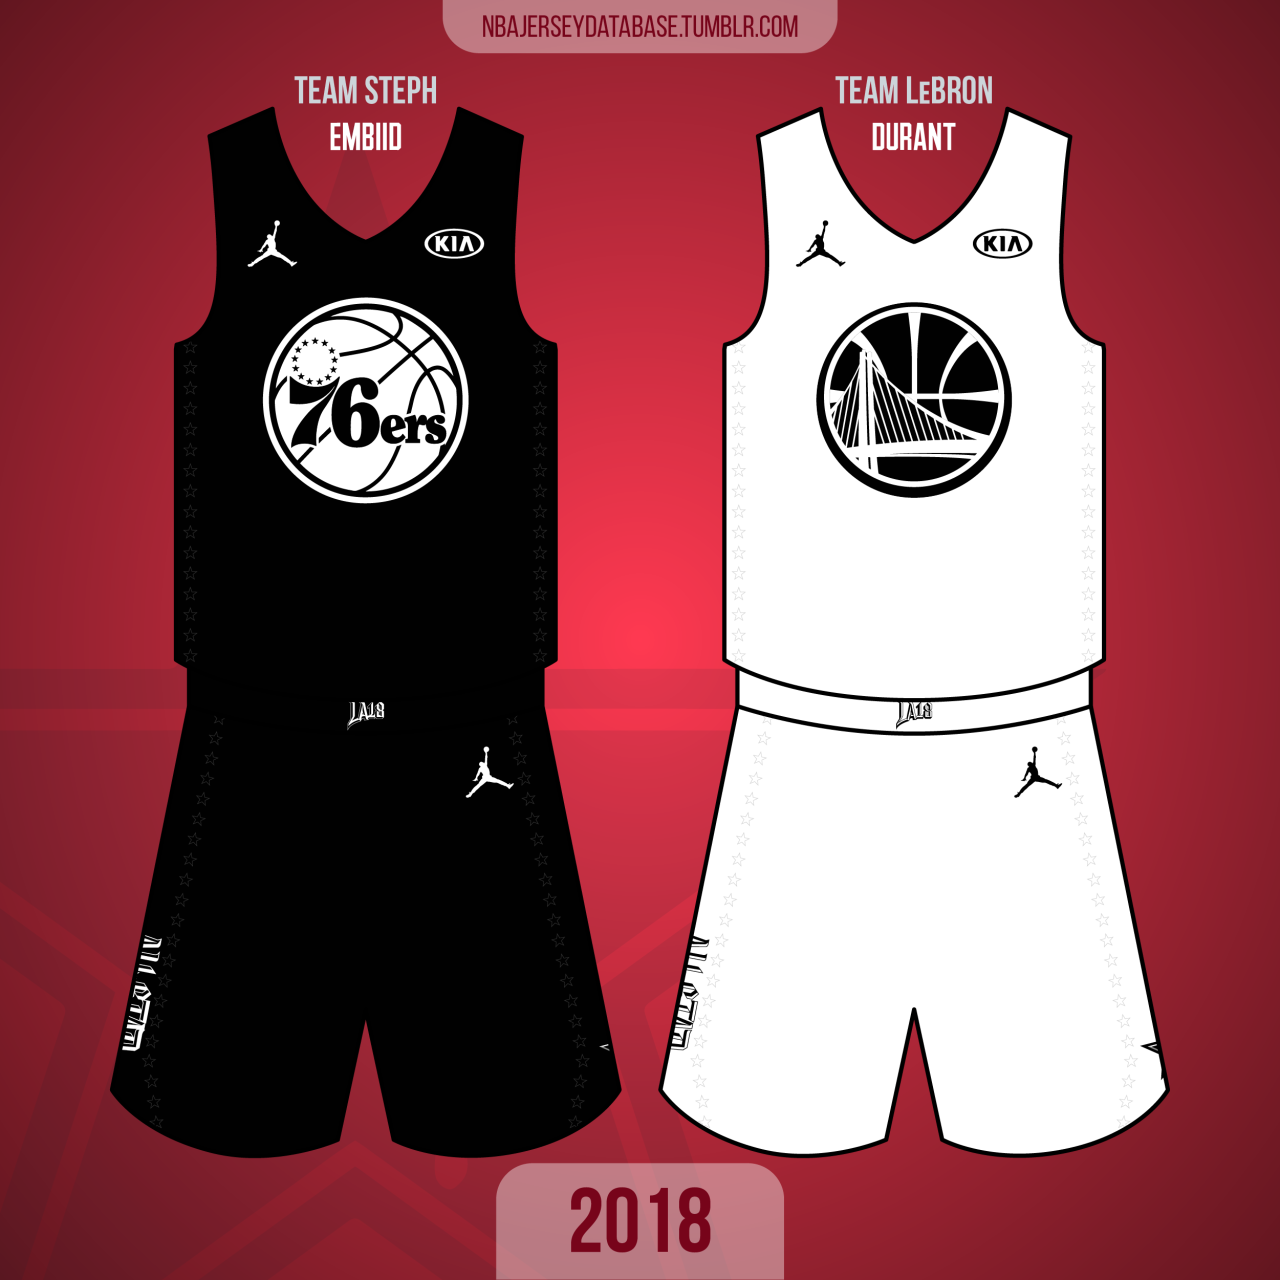 De gasten Tijdreeksen Aziatisch NBA Jersey Database, 2018 NBA All-Star Game Staples Center Team LeBron...